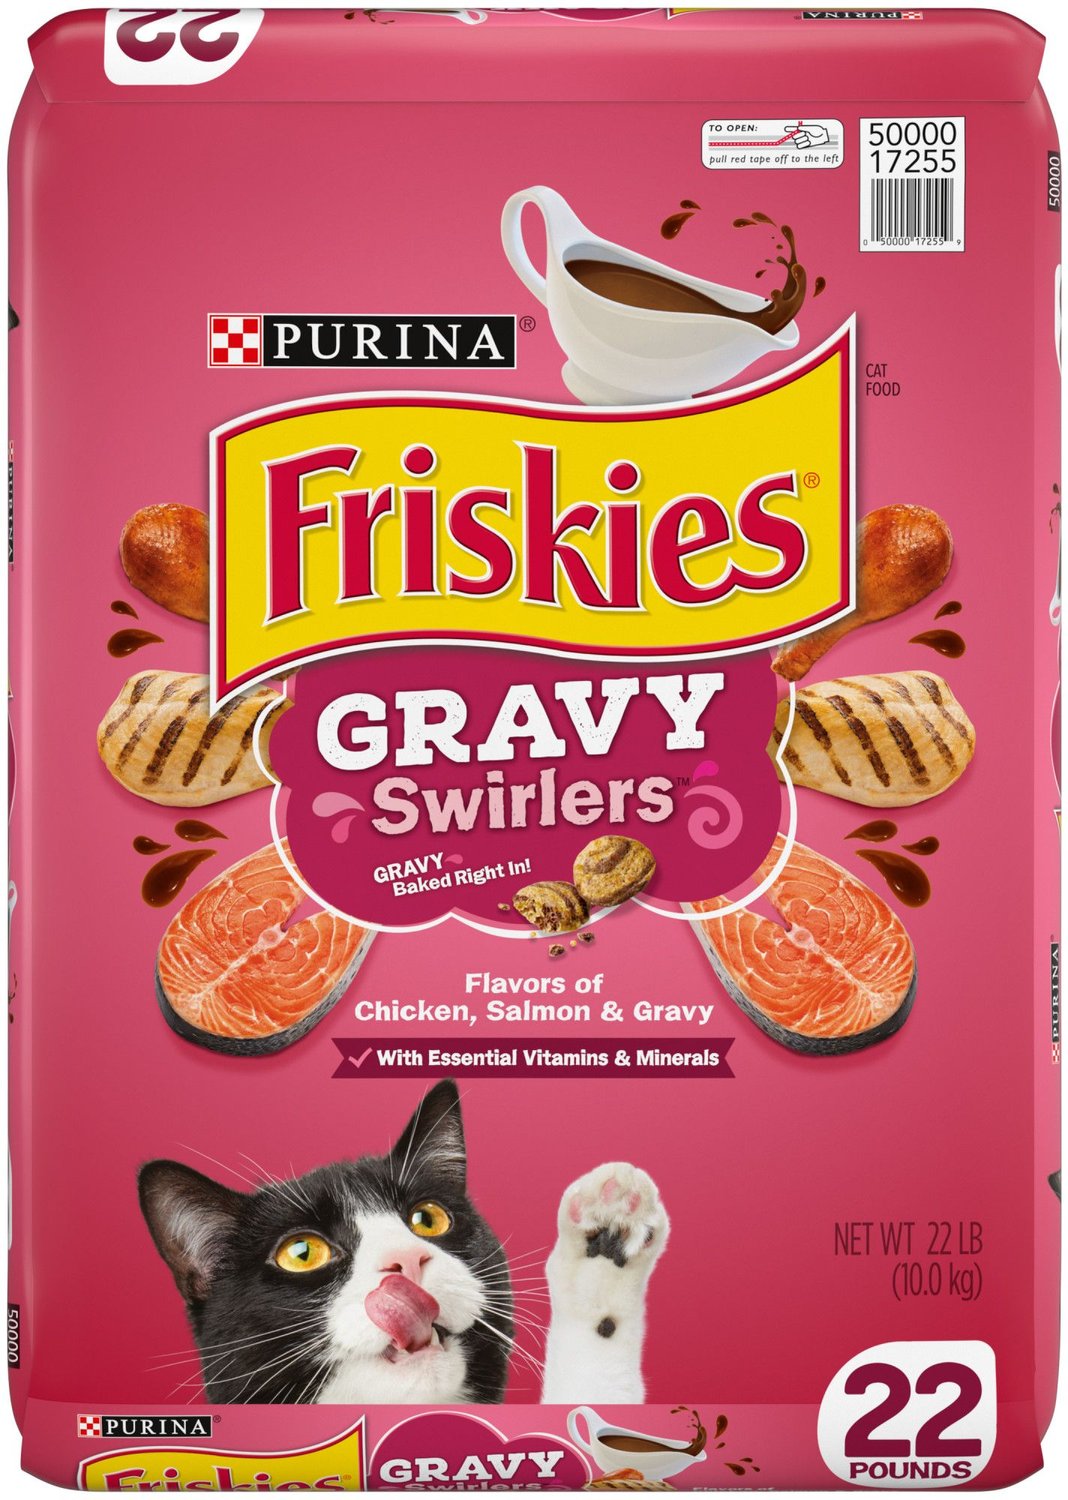 FRISKIES Gravy Swirlers Chicken and Salmon Flavor Dry Cat Food, 22lb